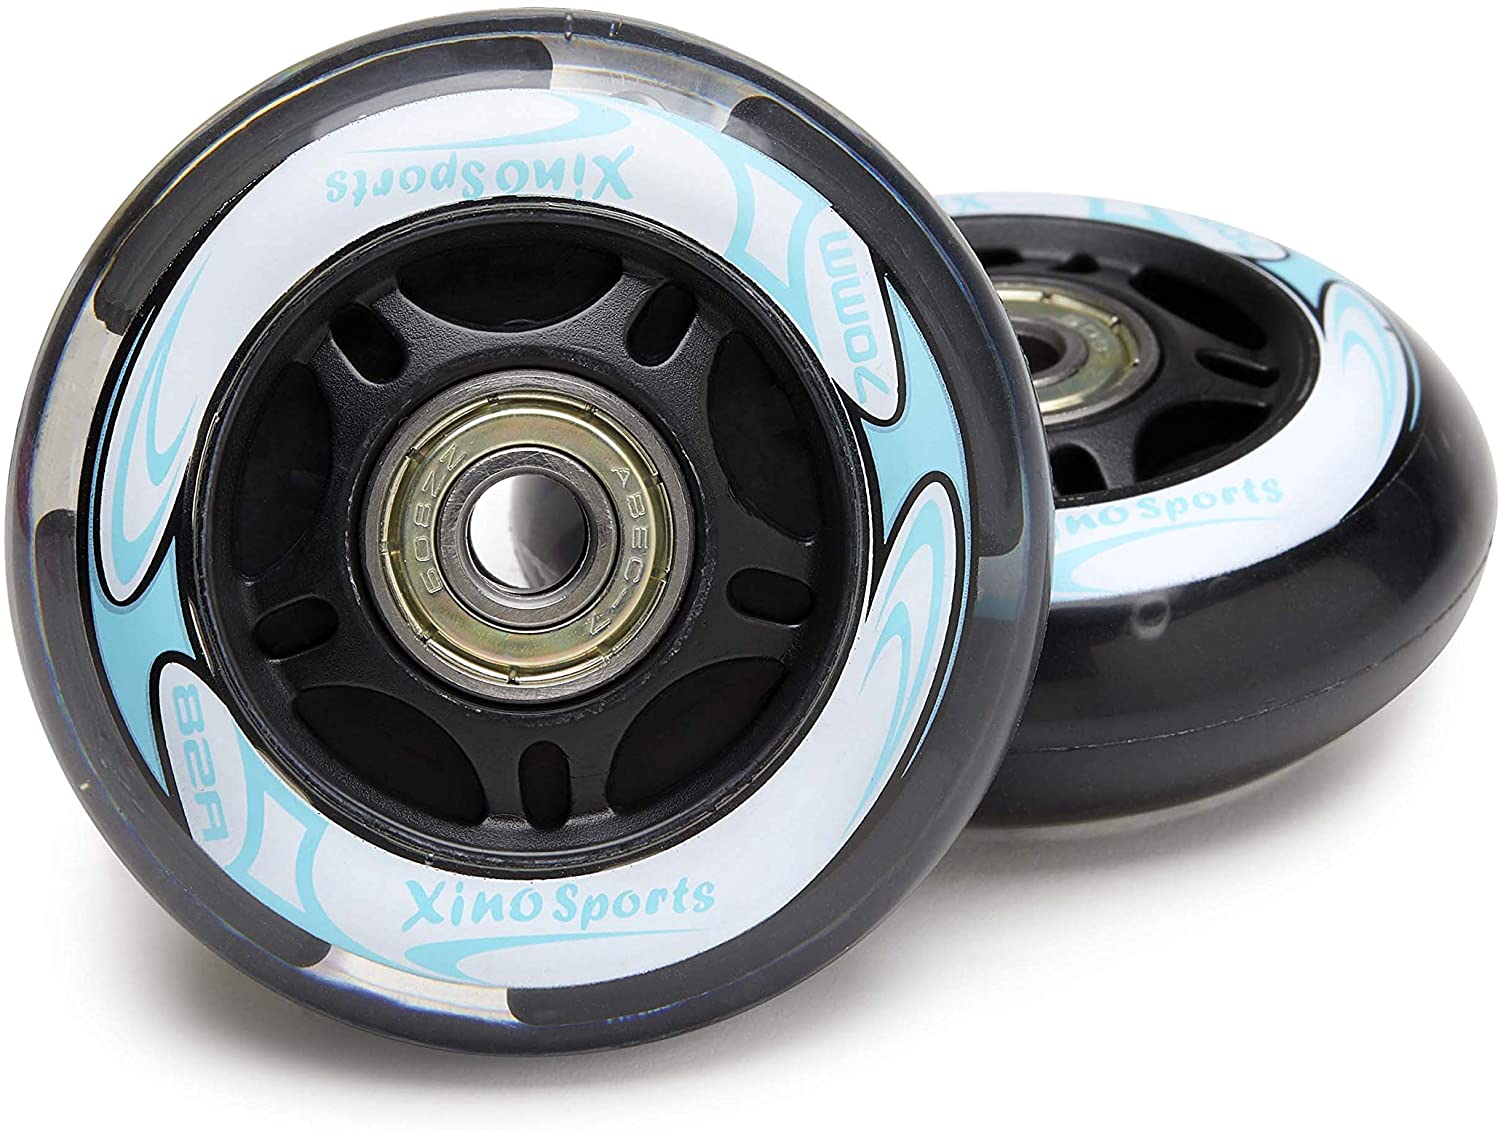  Inline Skates Replacement Wheels (Aqua) - Xino Sports